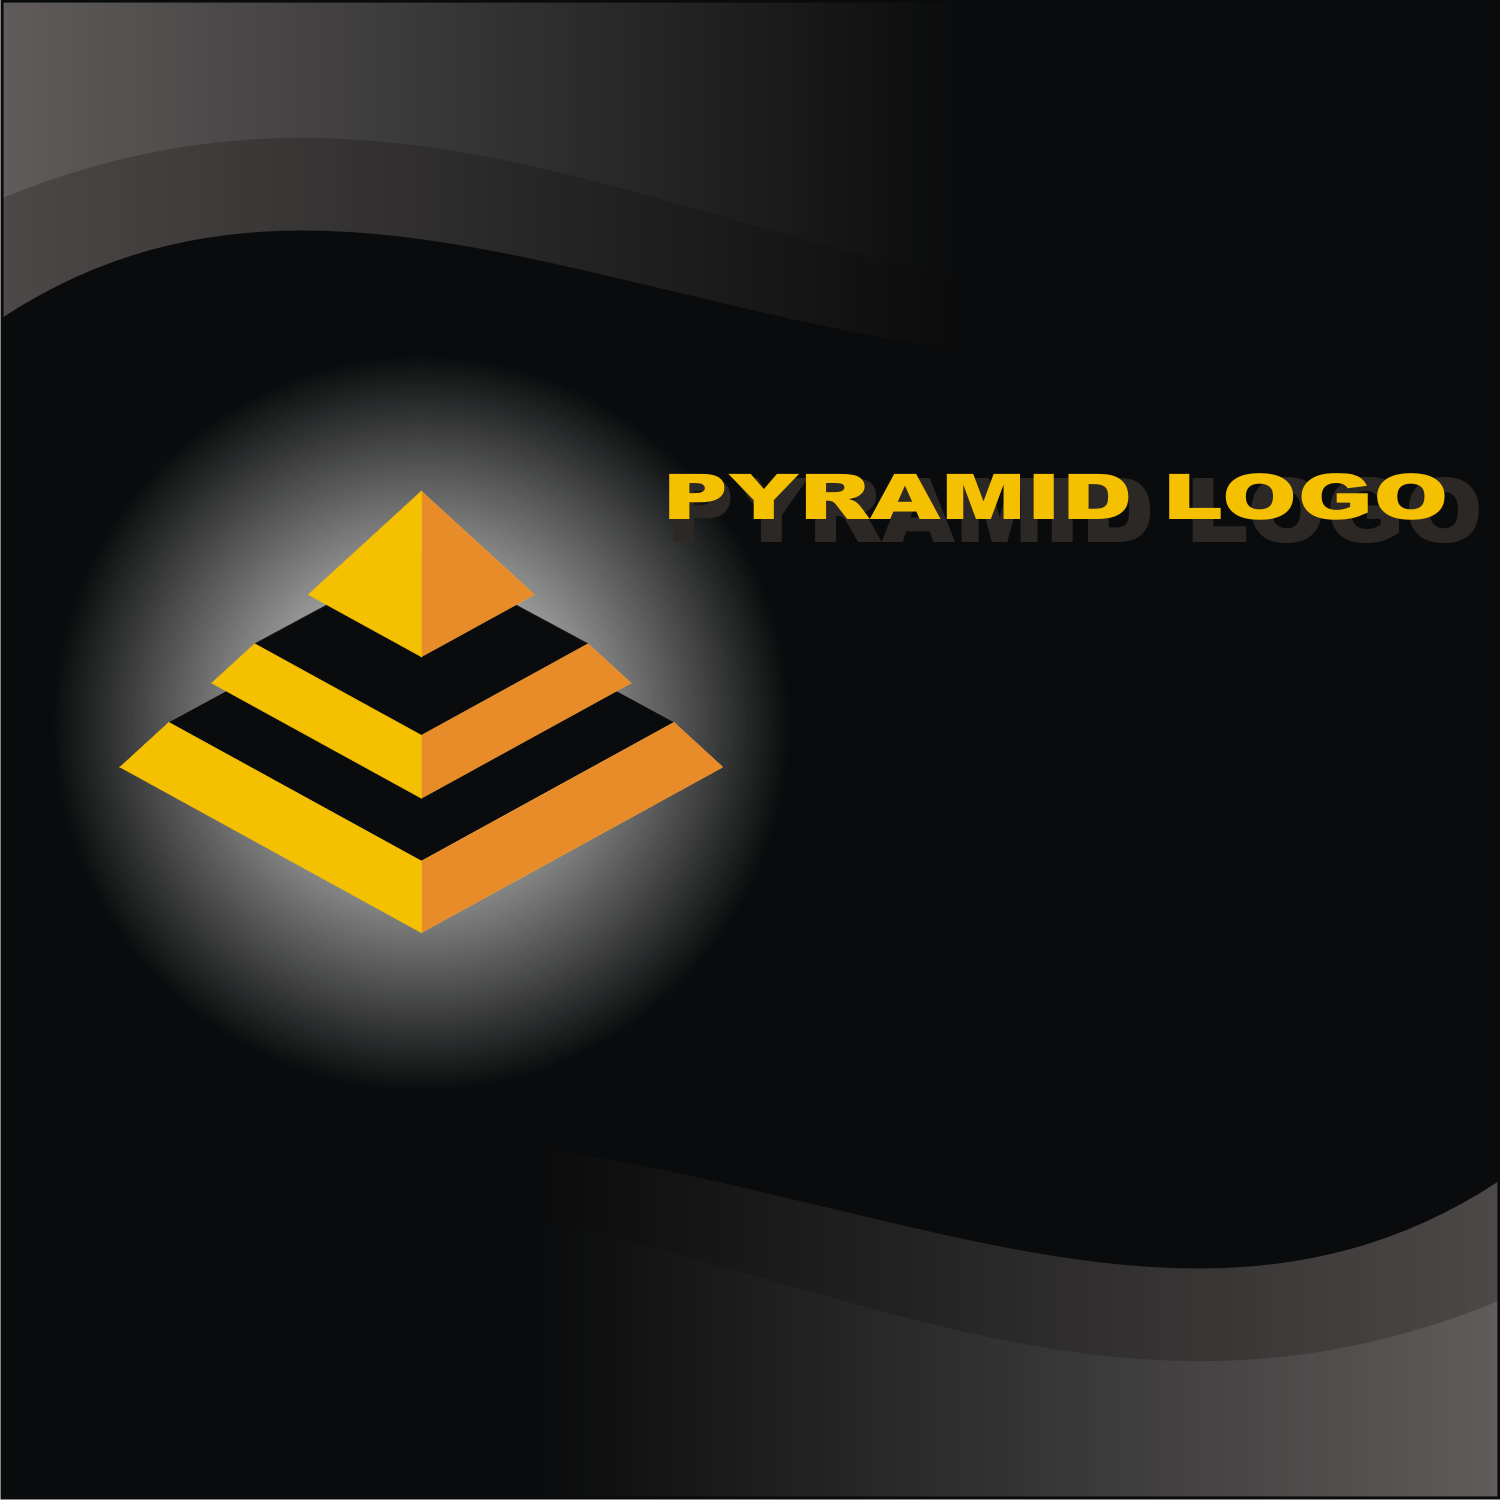 Pyramid logo template